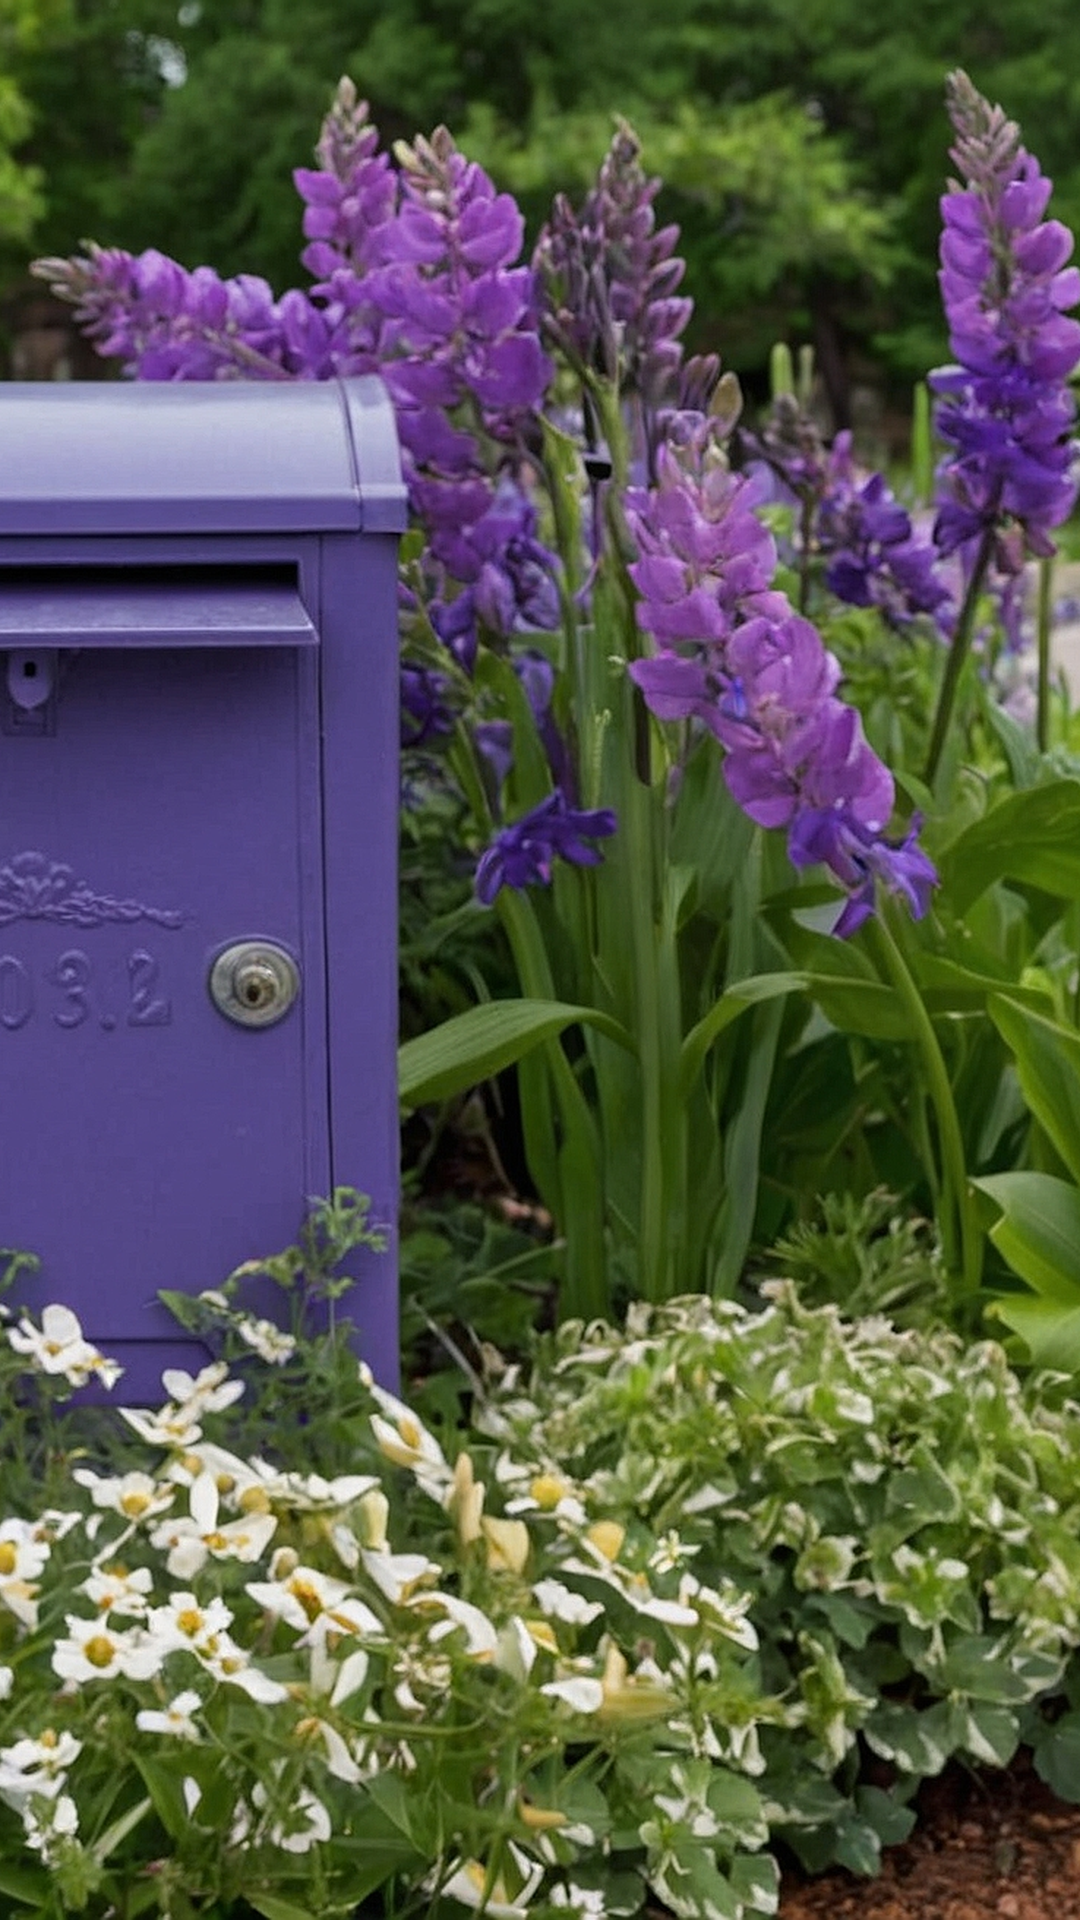 Flower Power by the Mailbox: Stunning Garden Ideas